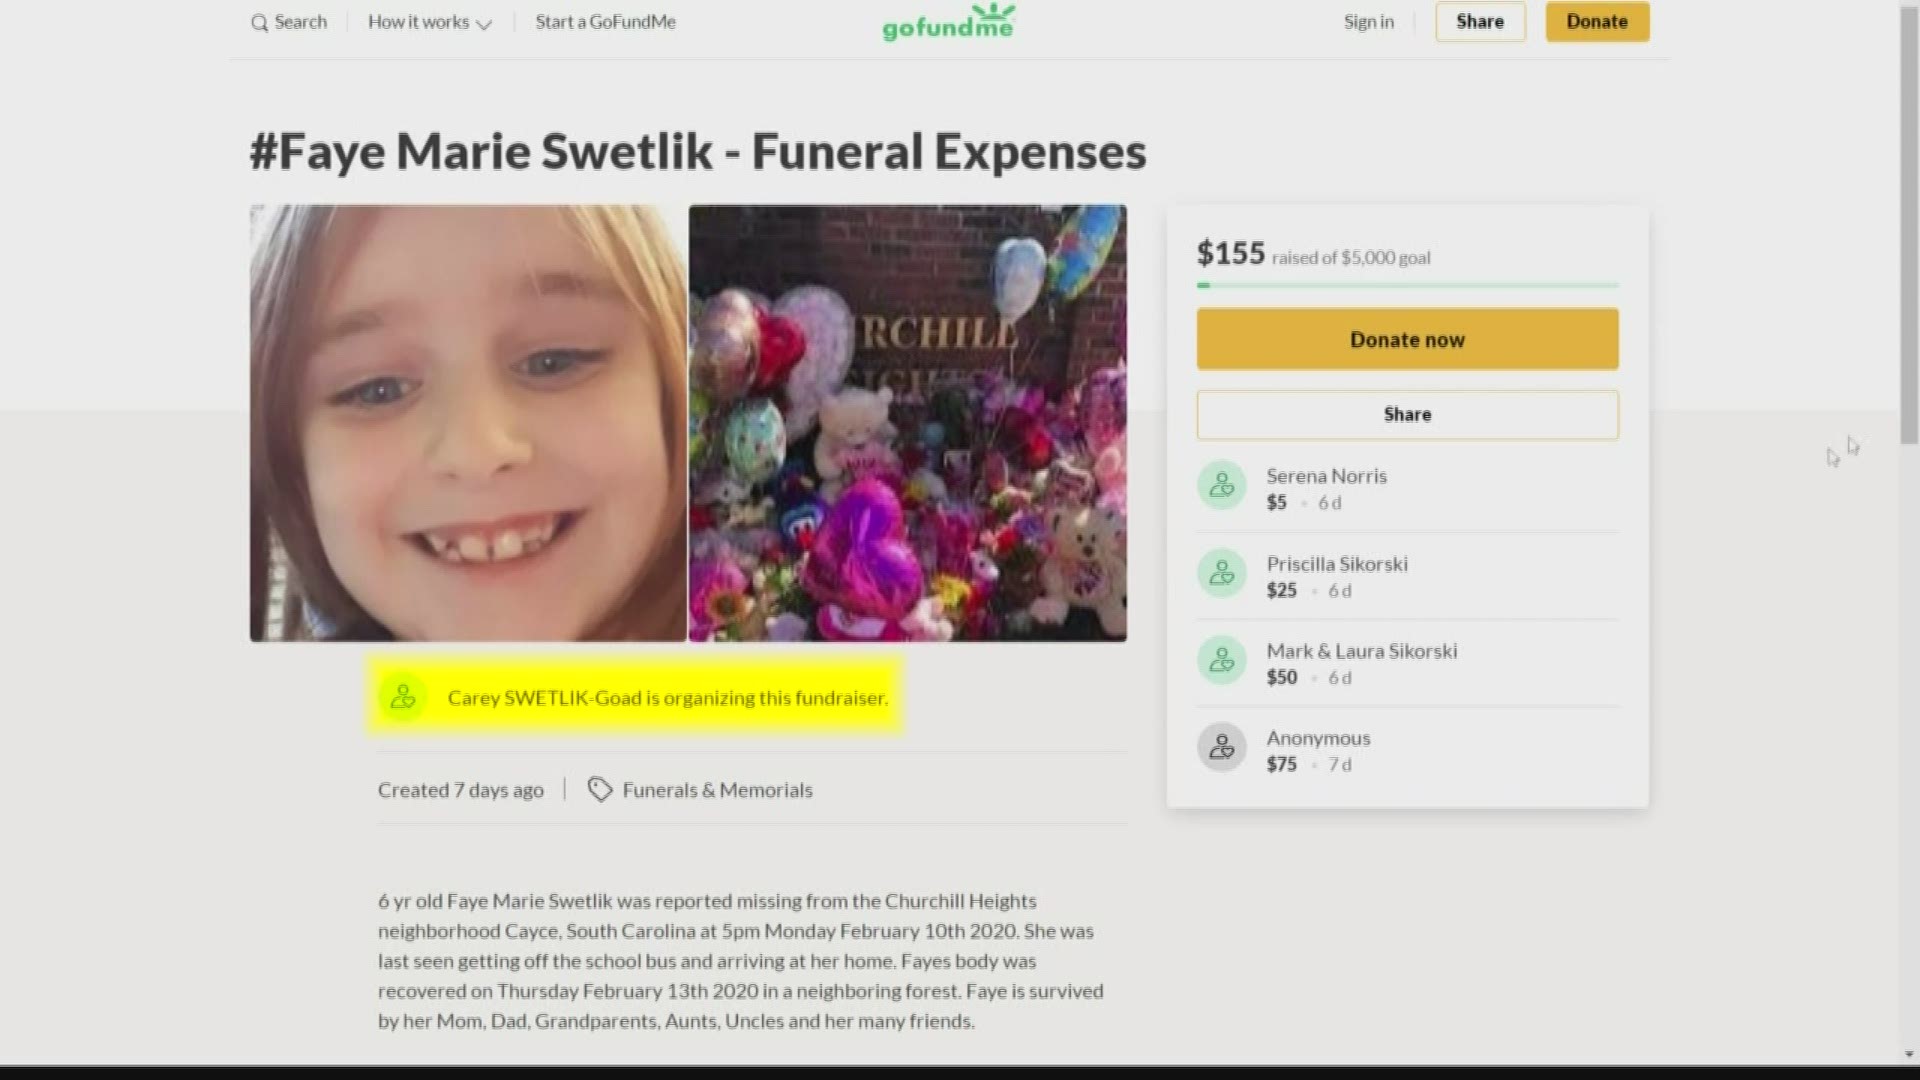 Since many GoFundMe fundraisers exist for Faye Swetlik, the family verified the legitimate ones